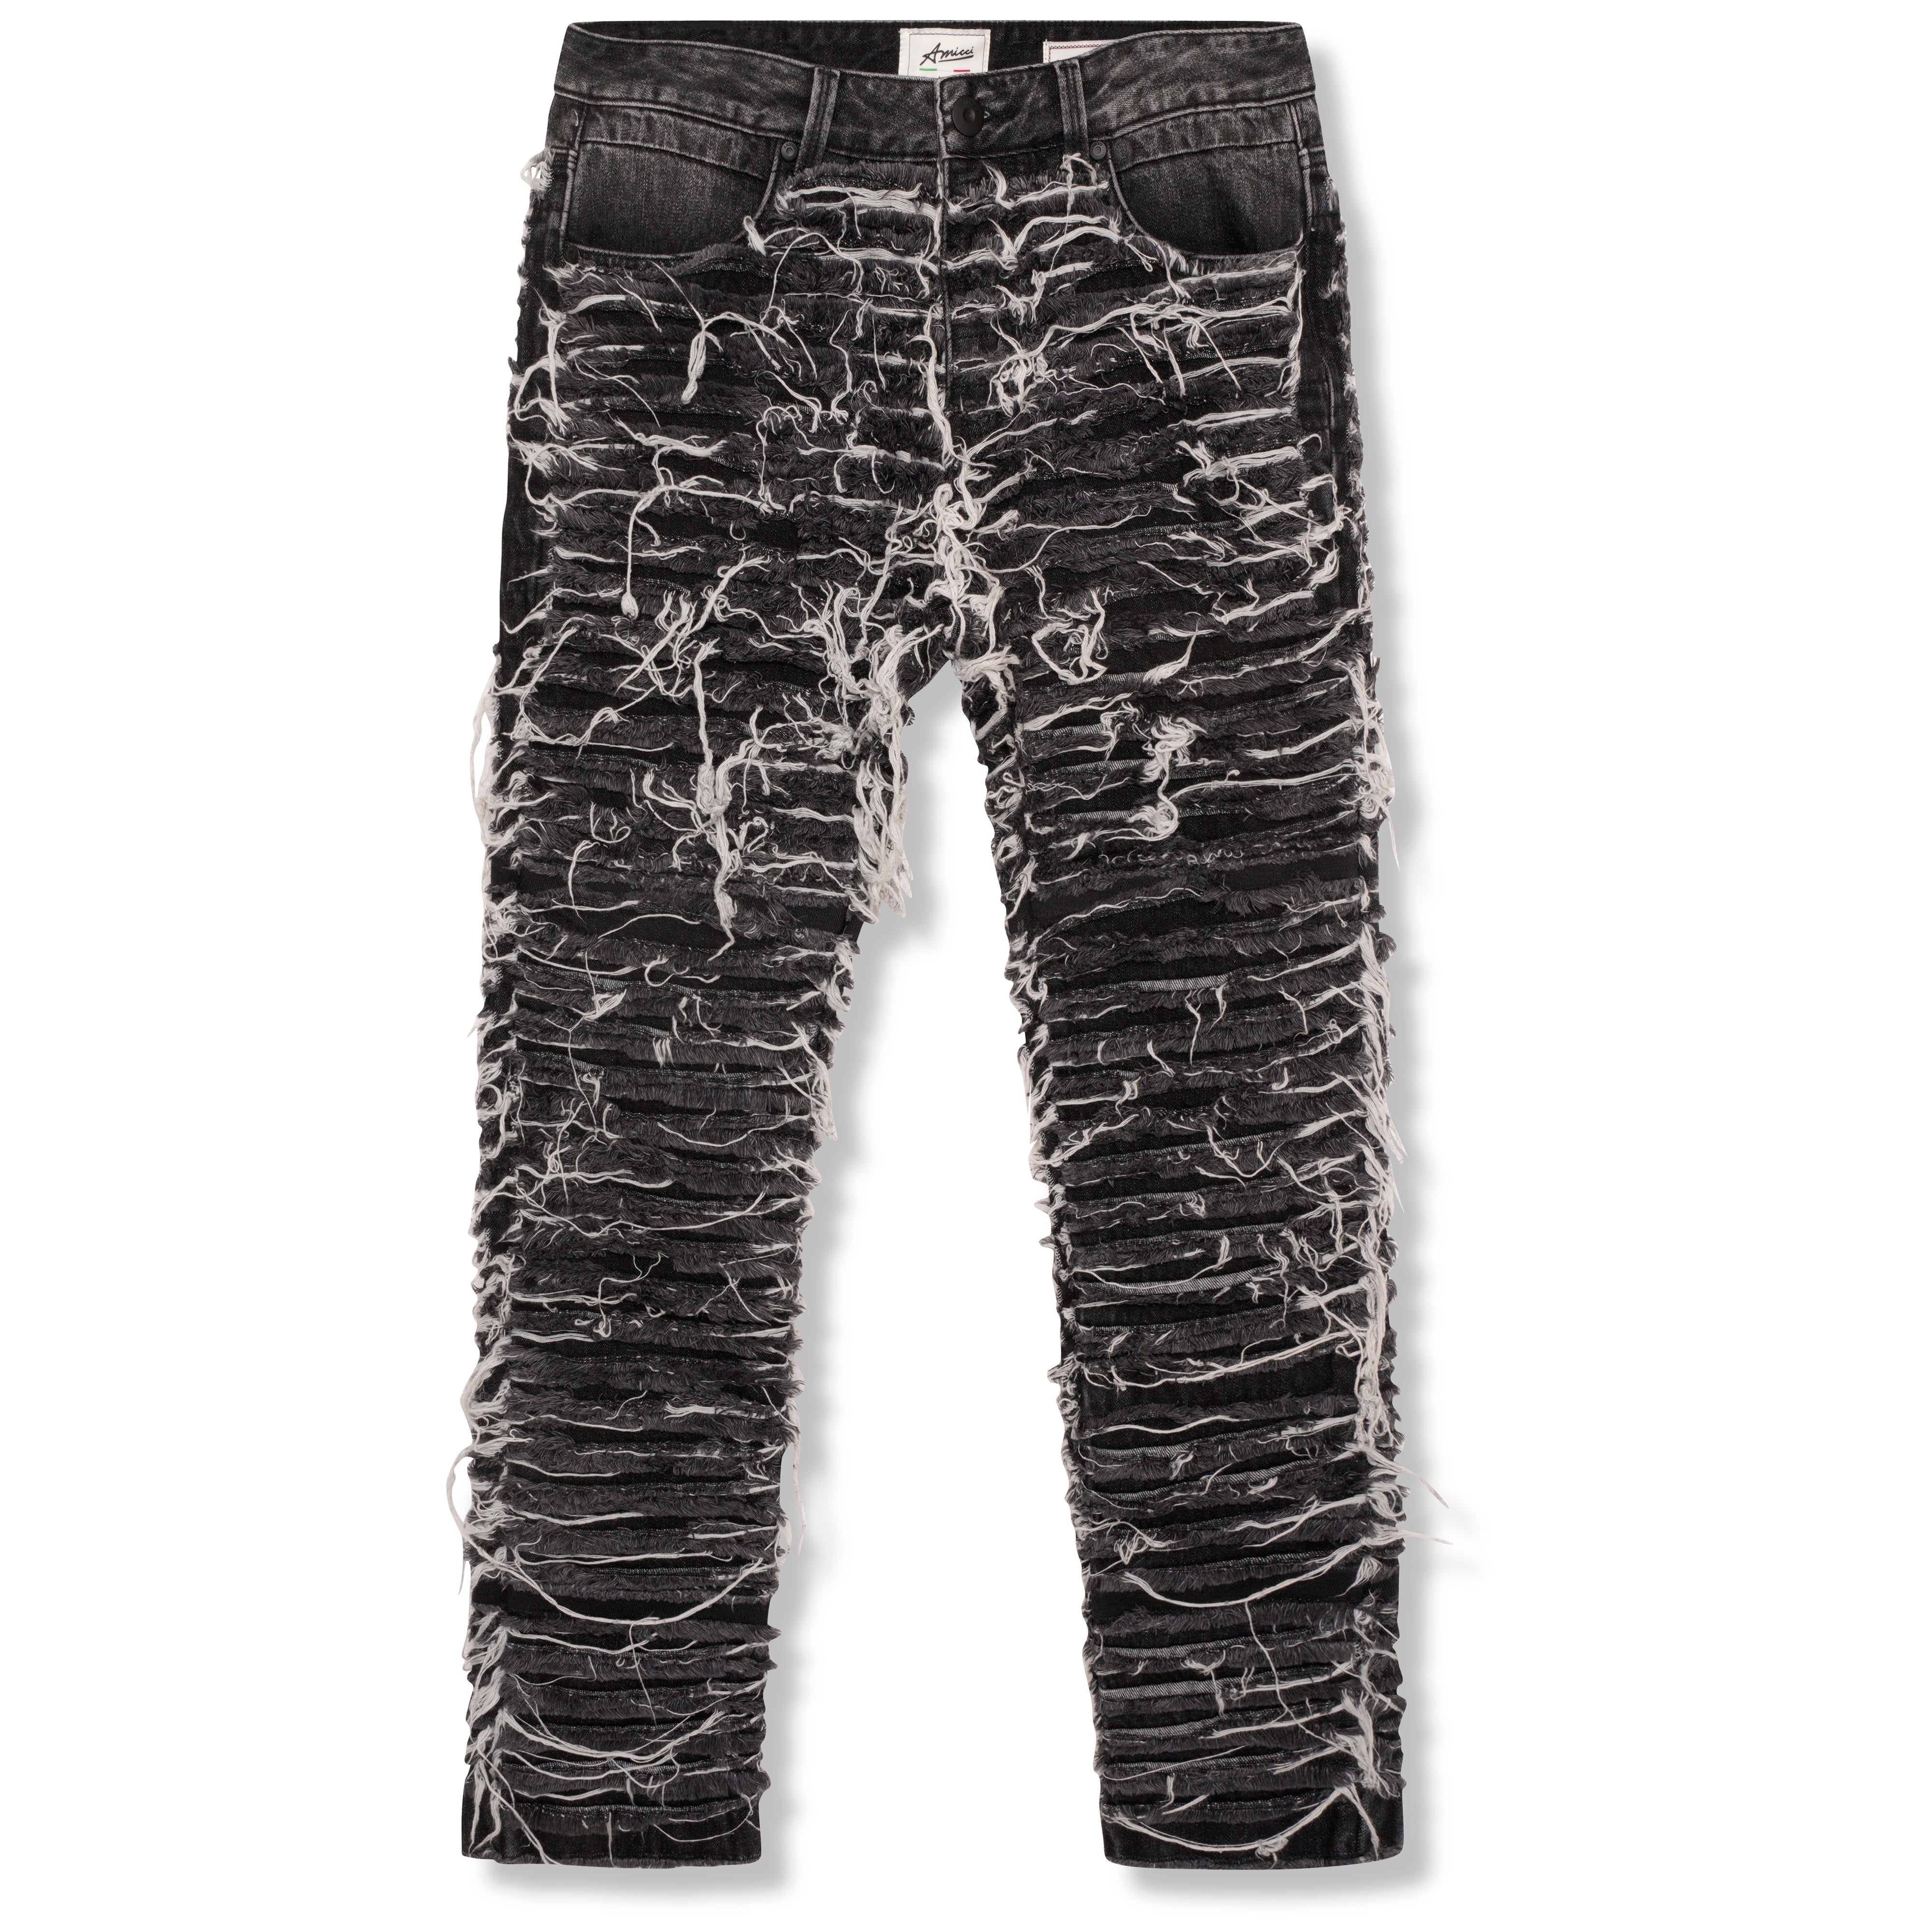 Amicci Men's Sassari Shredded Denim Jeans Washed Black - Premium ...